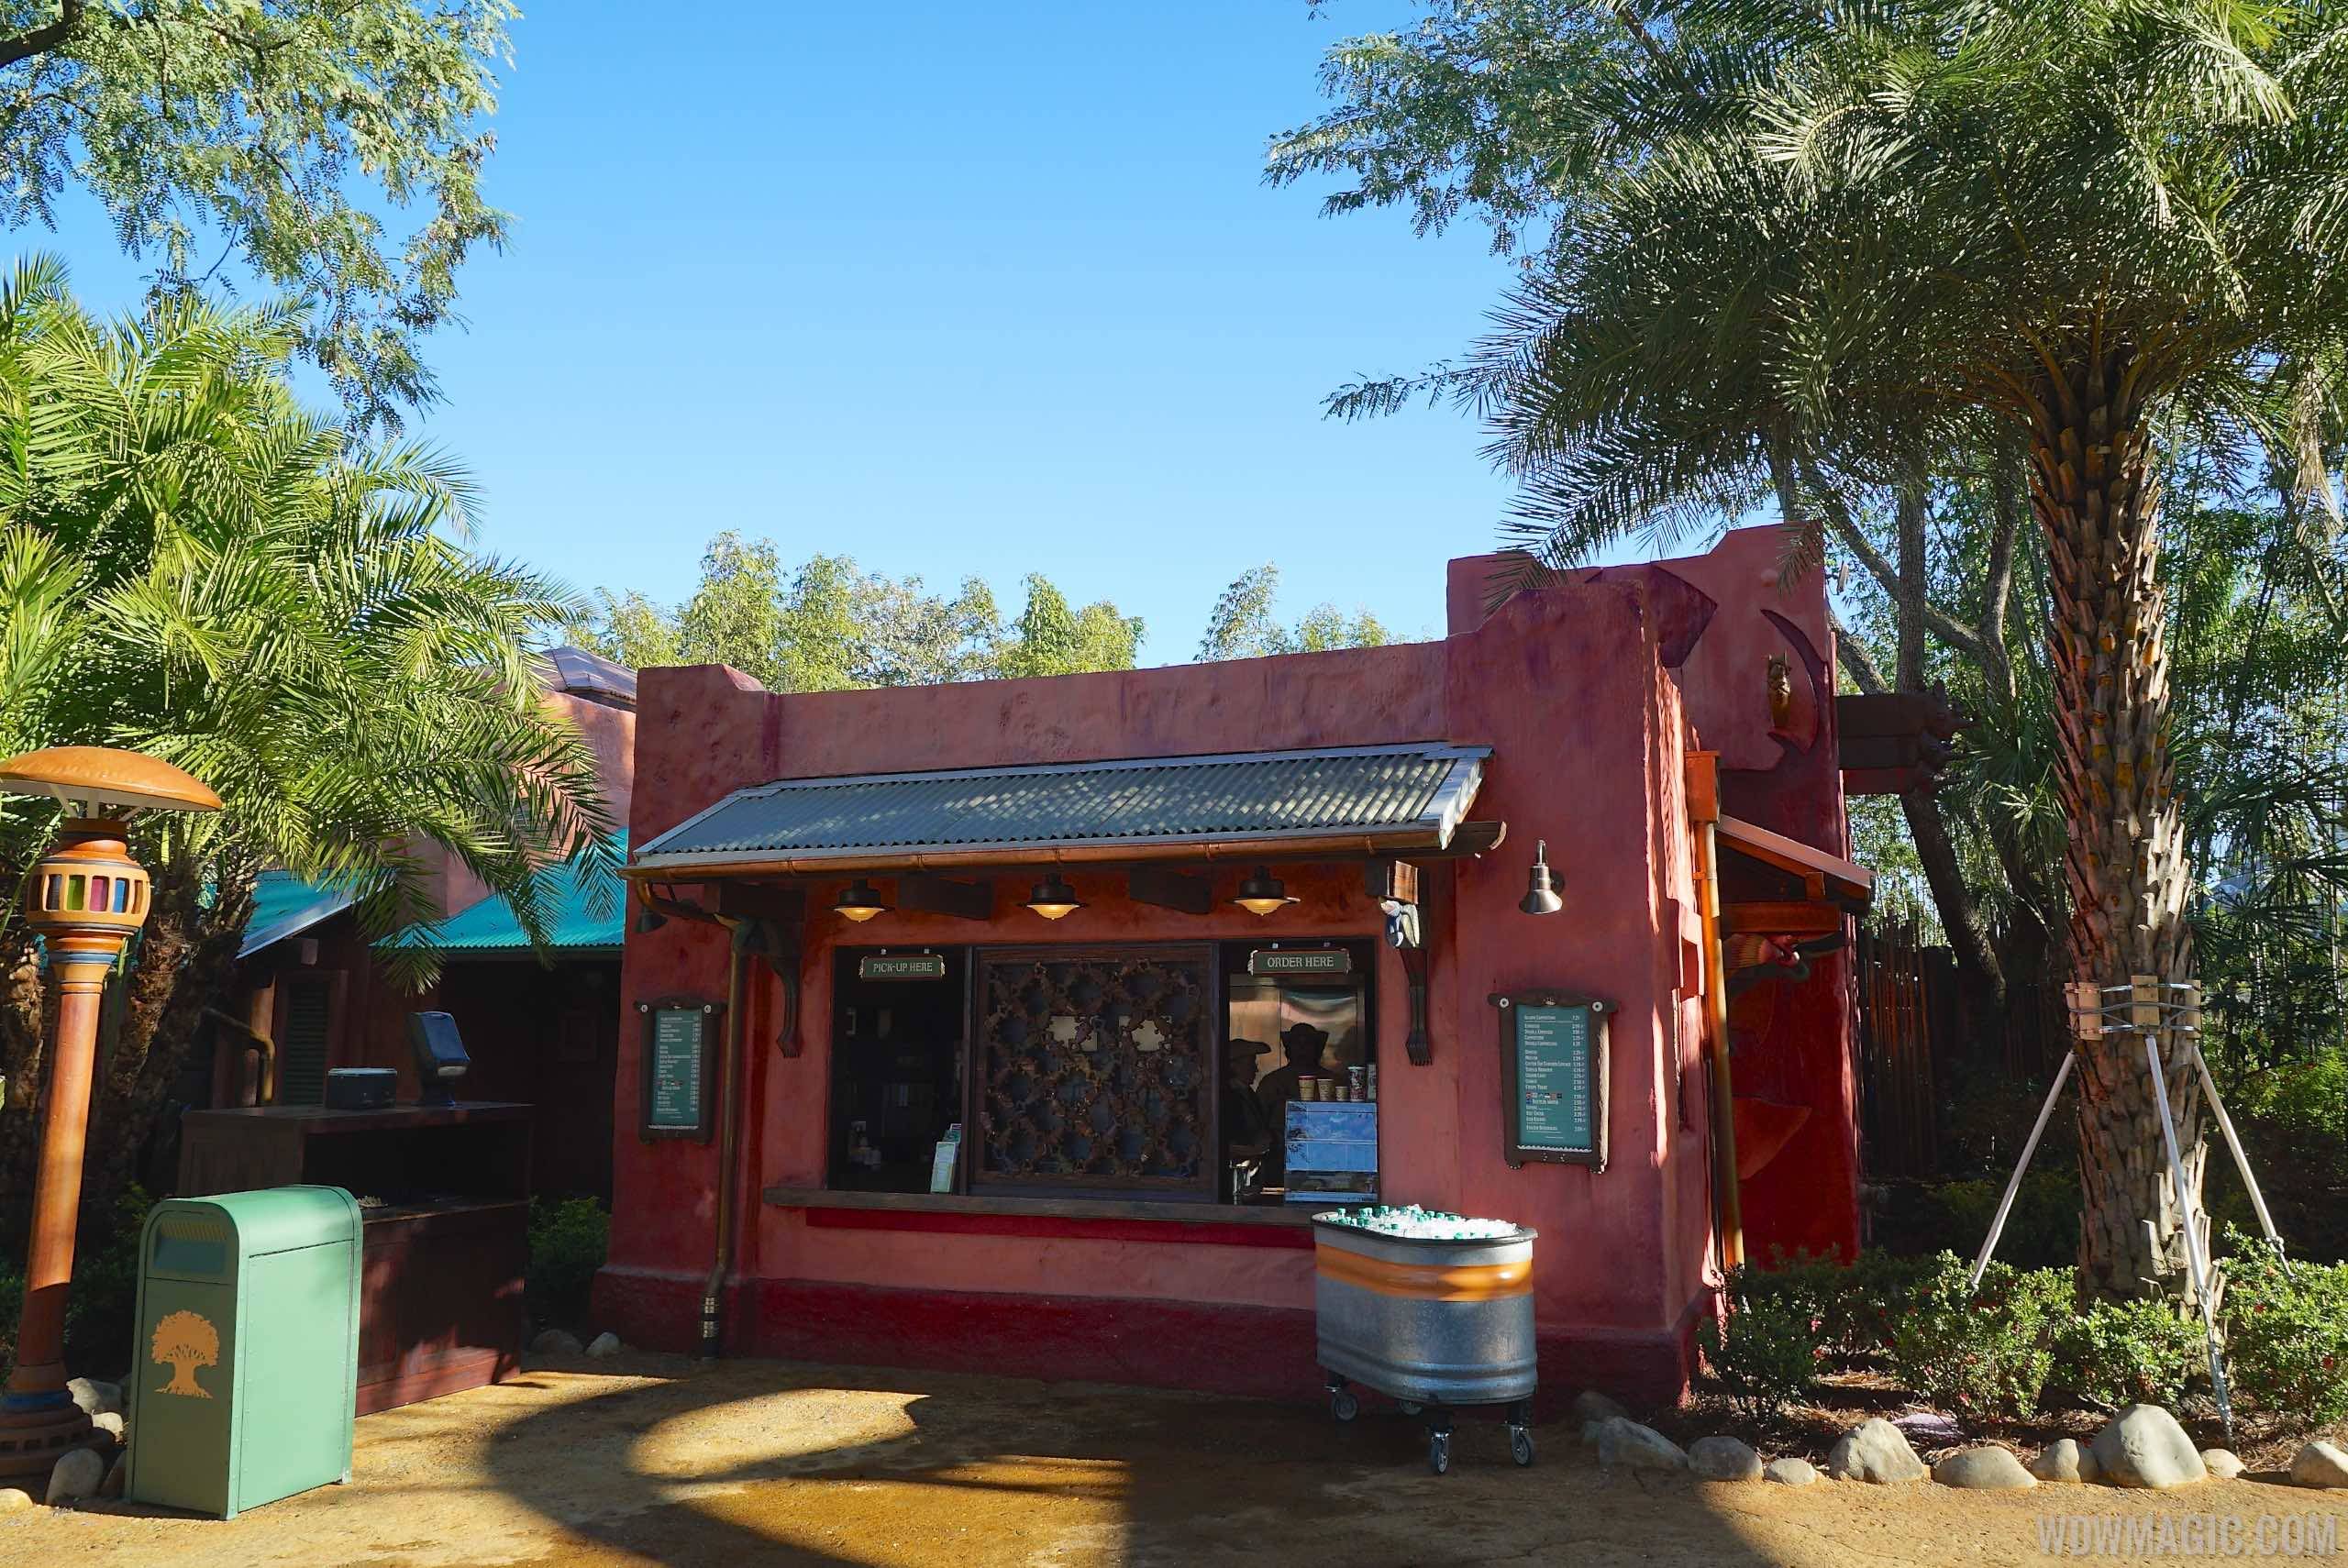 PHOTOS - Isle of Java coffee kiosk opens at Disney's Animal Kingdom